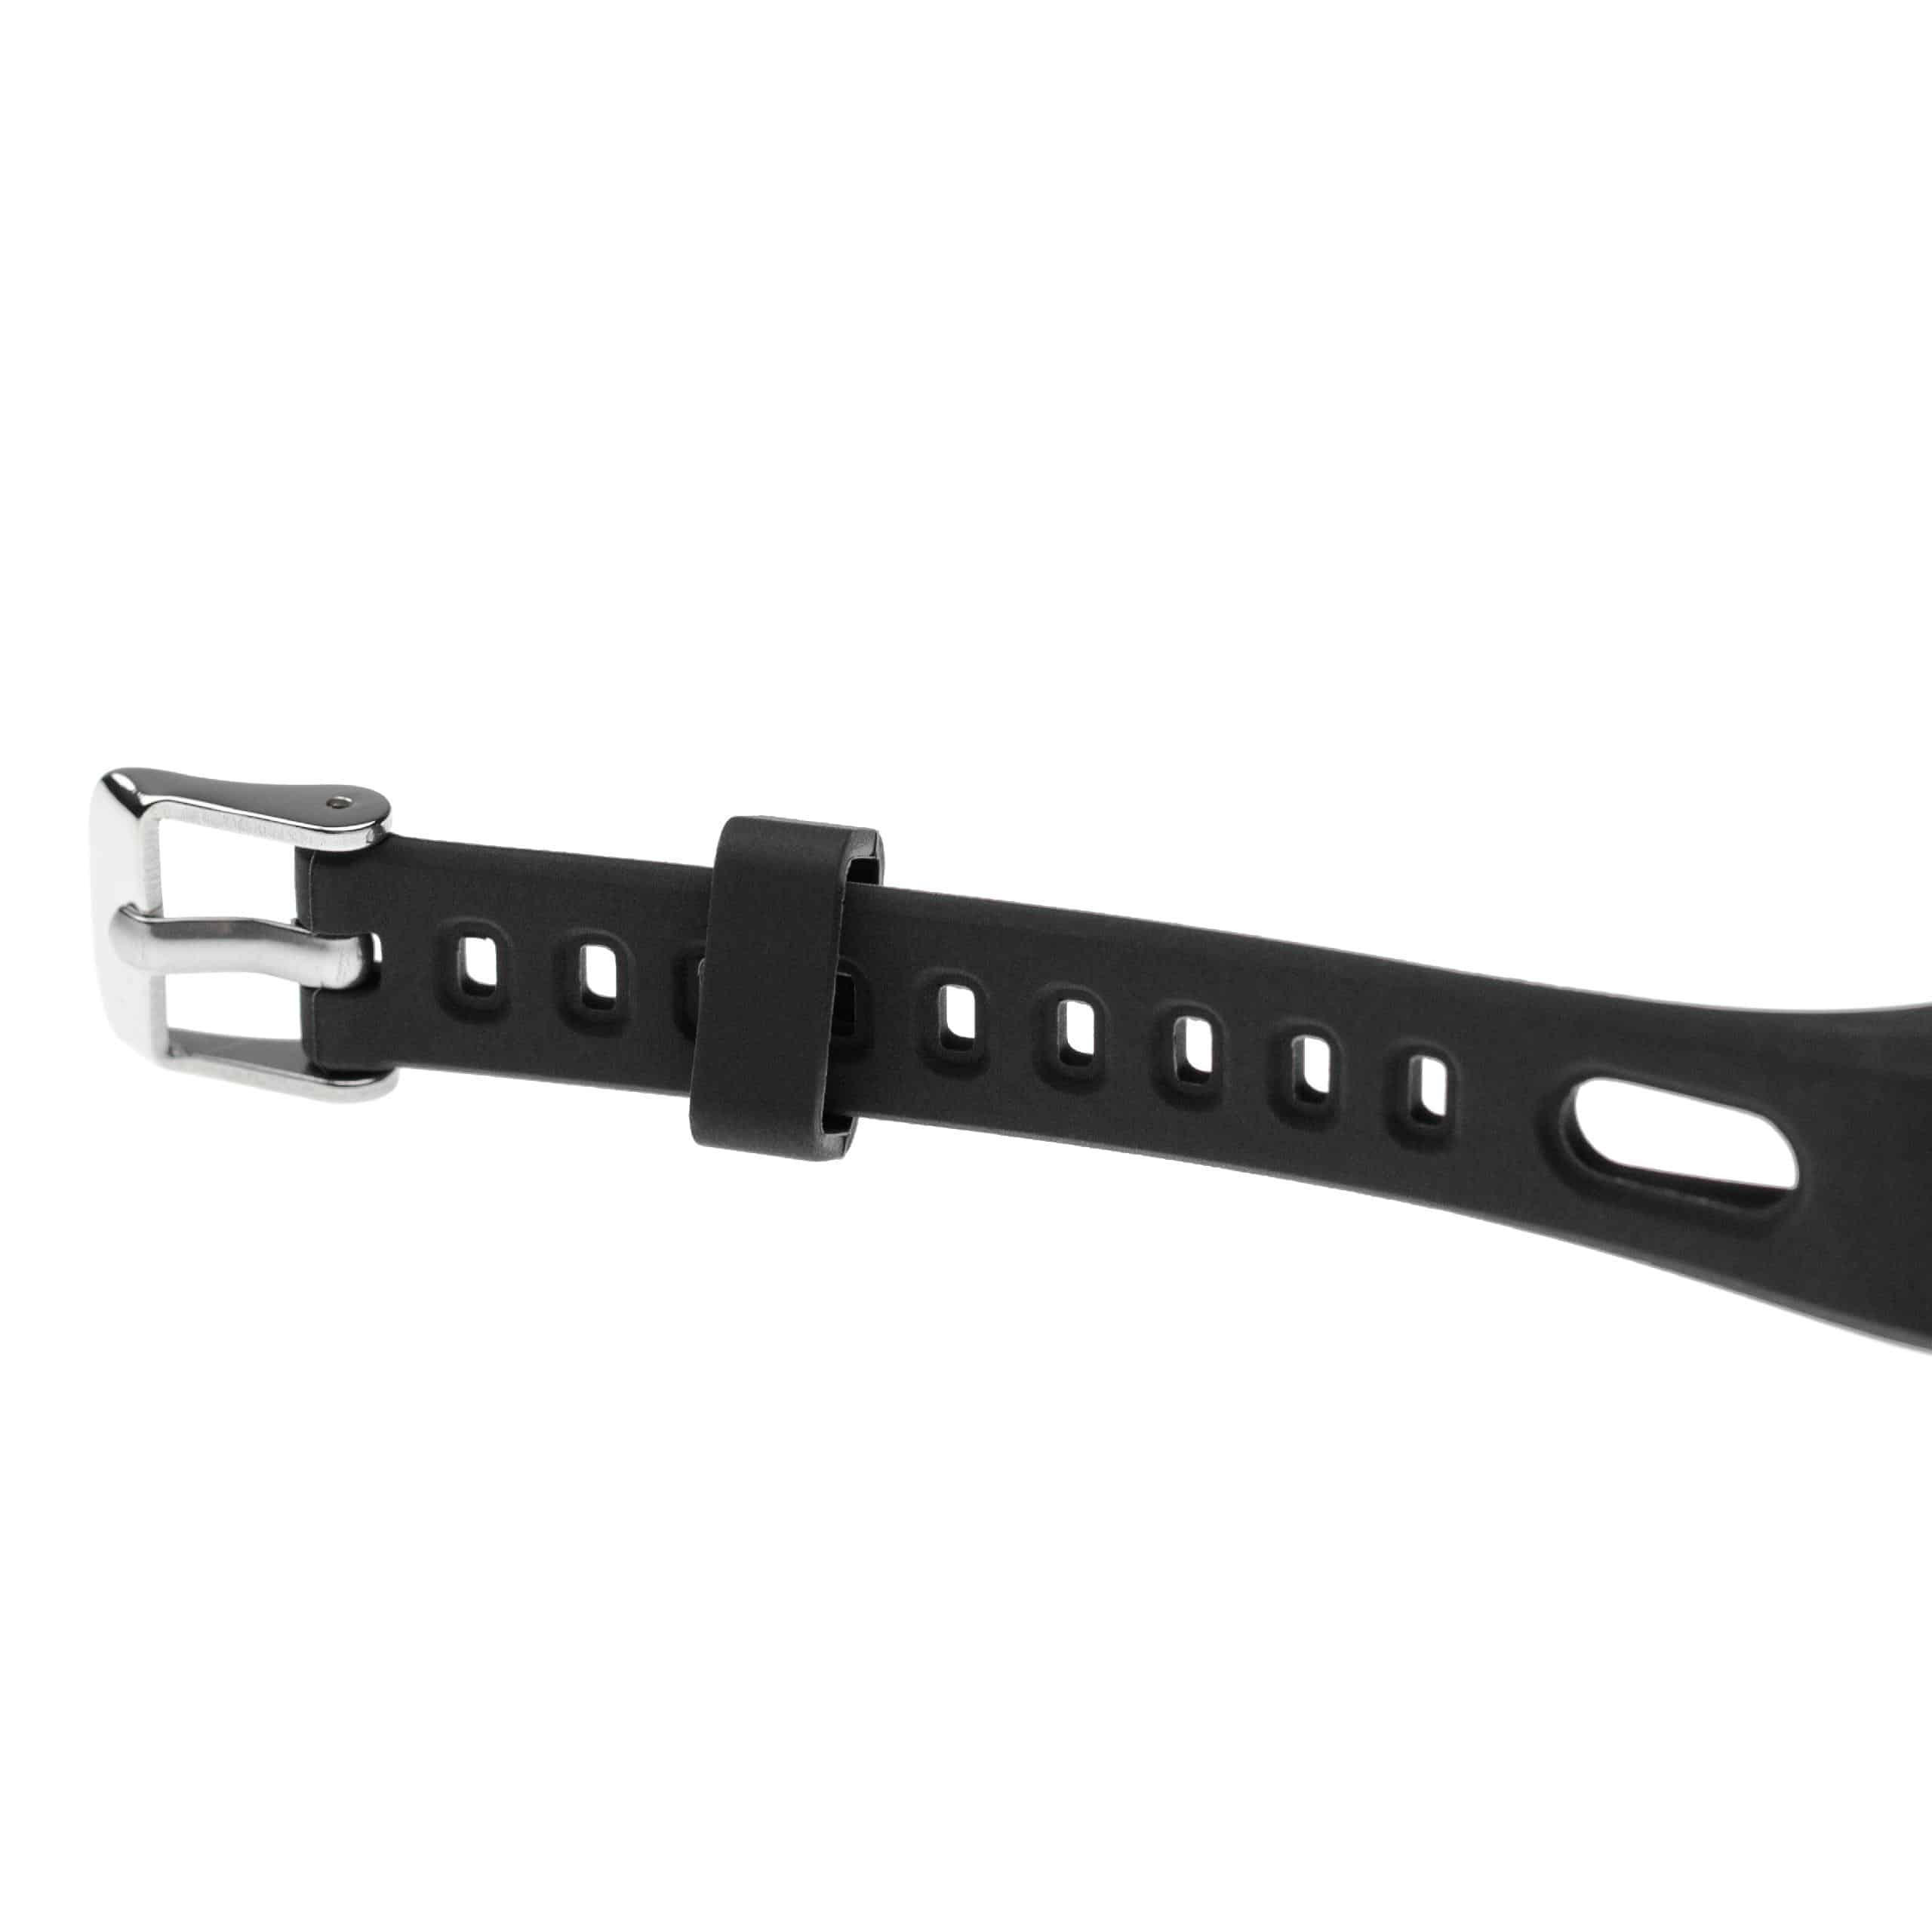 Armband für Huawei Honor / Running Smartwatch - 20,1 cm lang, 40mm breit, Silikon, schwarz